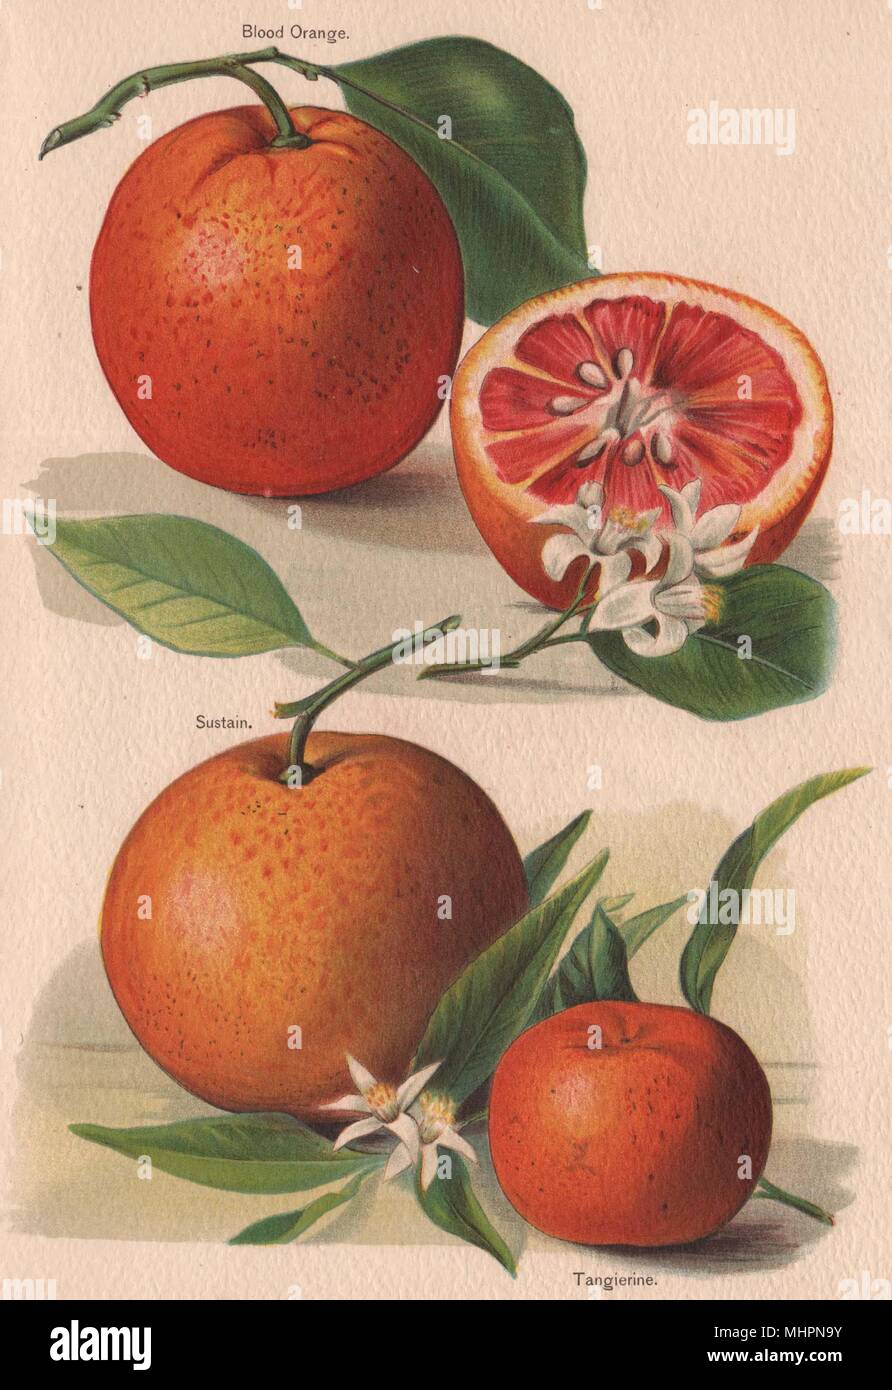 Les agrumes. Orange sanguine ; soutenir ; Tangierine. WRIGHT Chromolithographie 1892 imprimer Banque D'Images